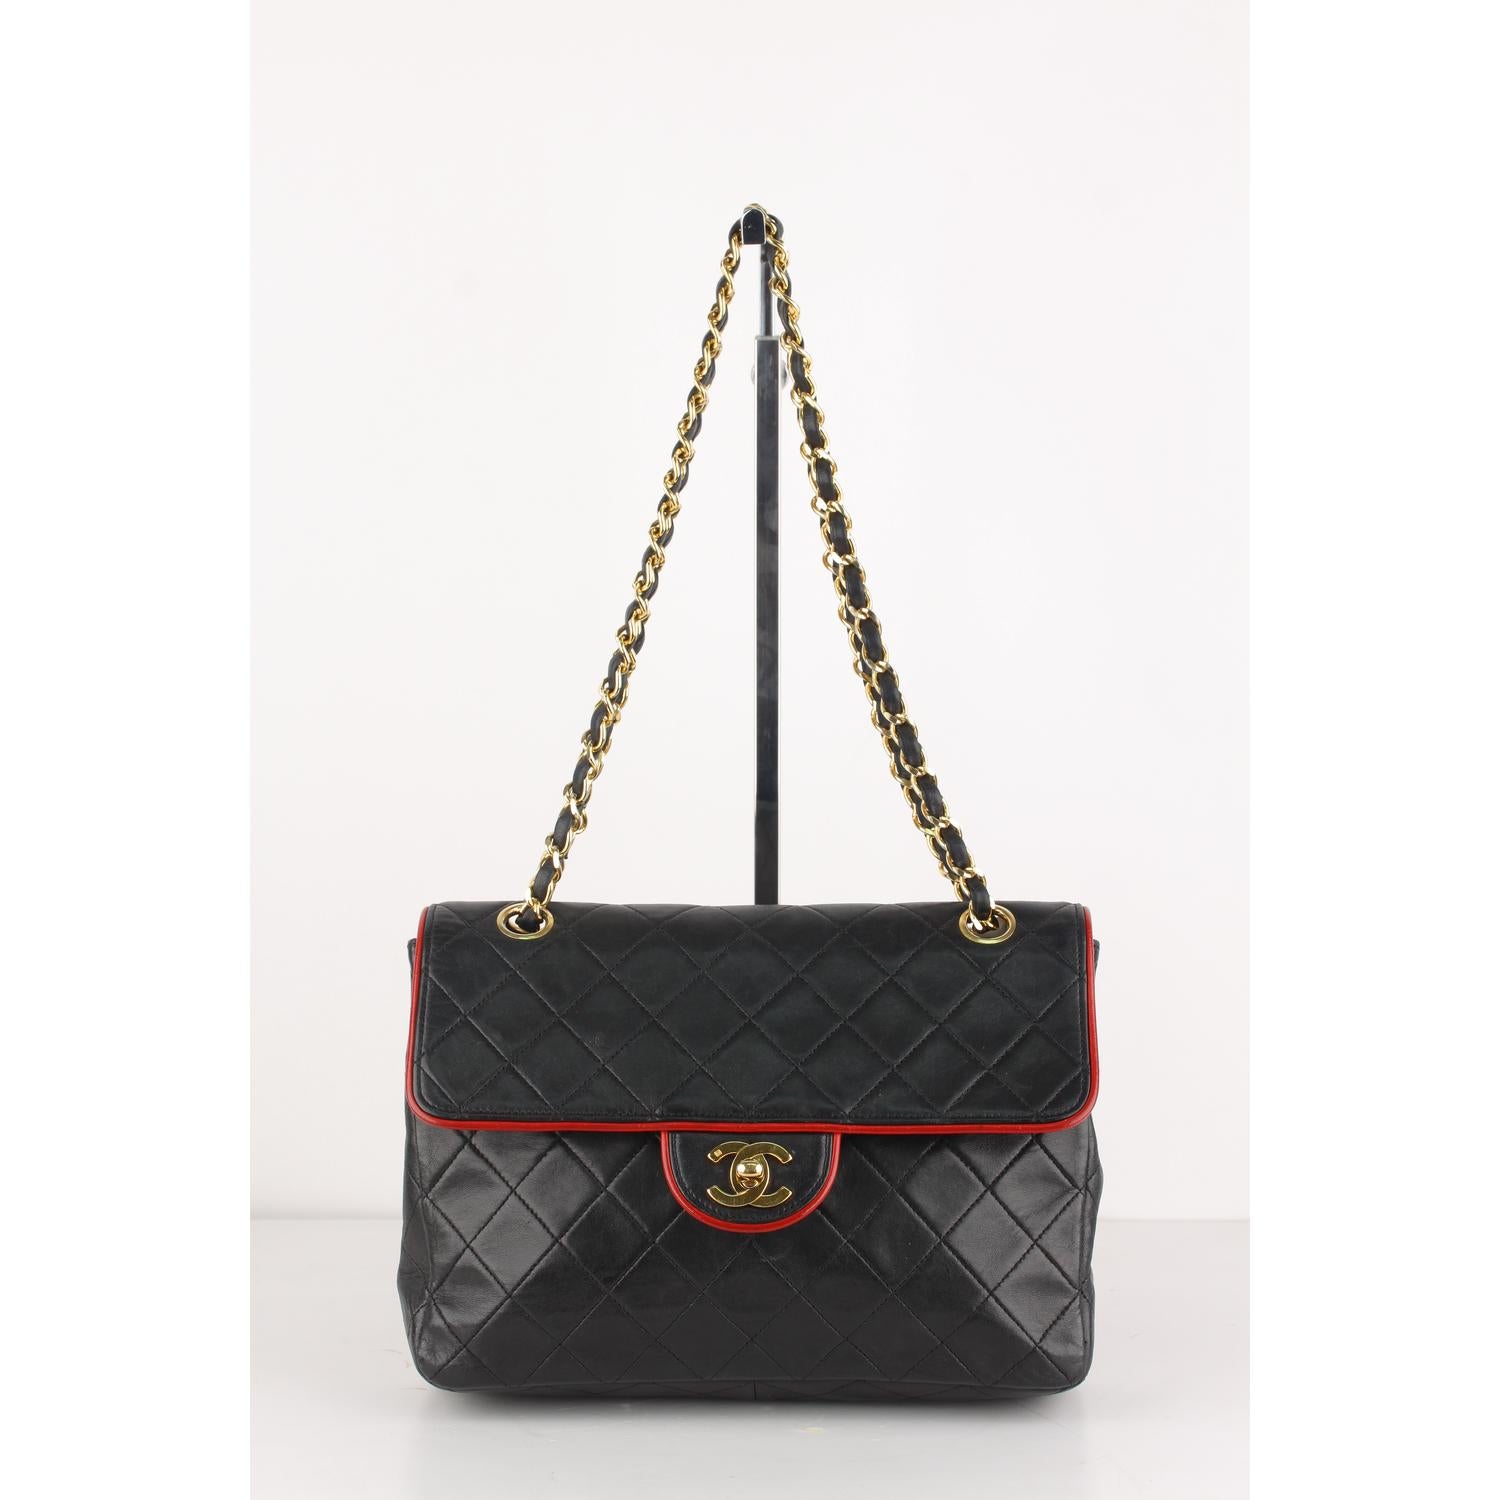 Chanel Vintage Black Quilted Leather Shoulder Bag with Contrast Trim

Material : Leather
Color : Black
Model : Shoulder Bag
Gender : Women
Country of Manufacture : France
Size : Medium

Bag Depth : 2.25 inches - 5,7 cm 
Bag Height : 7 inches - 17,8